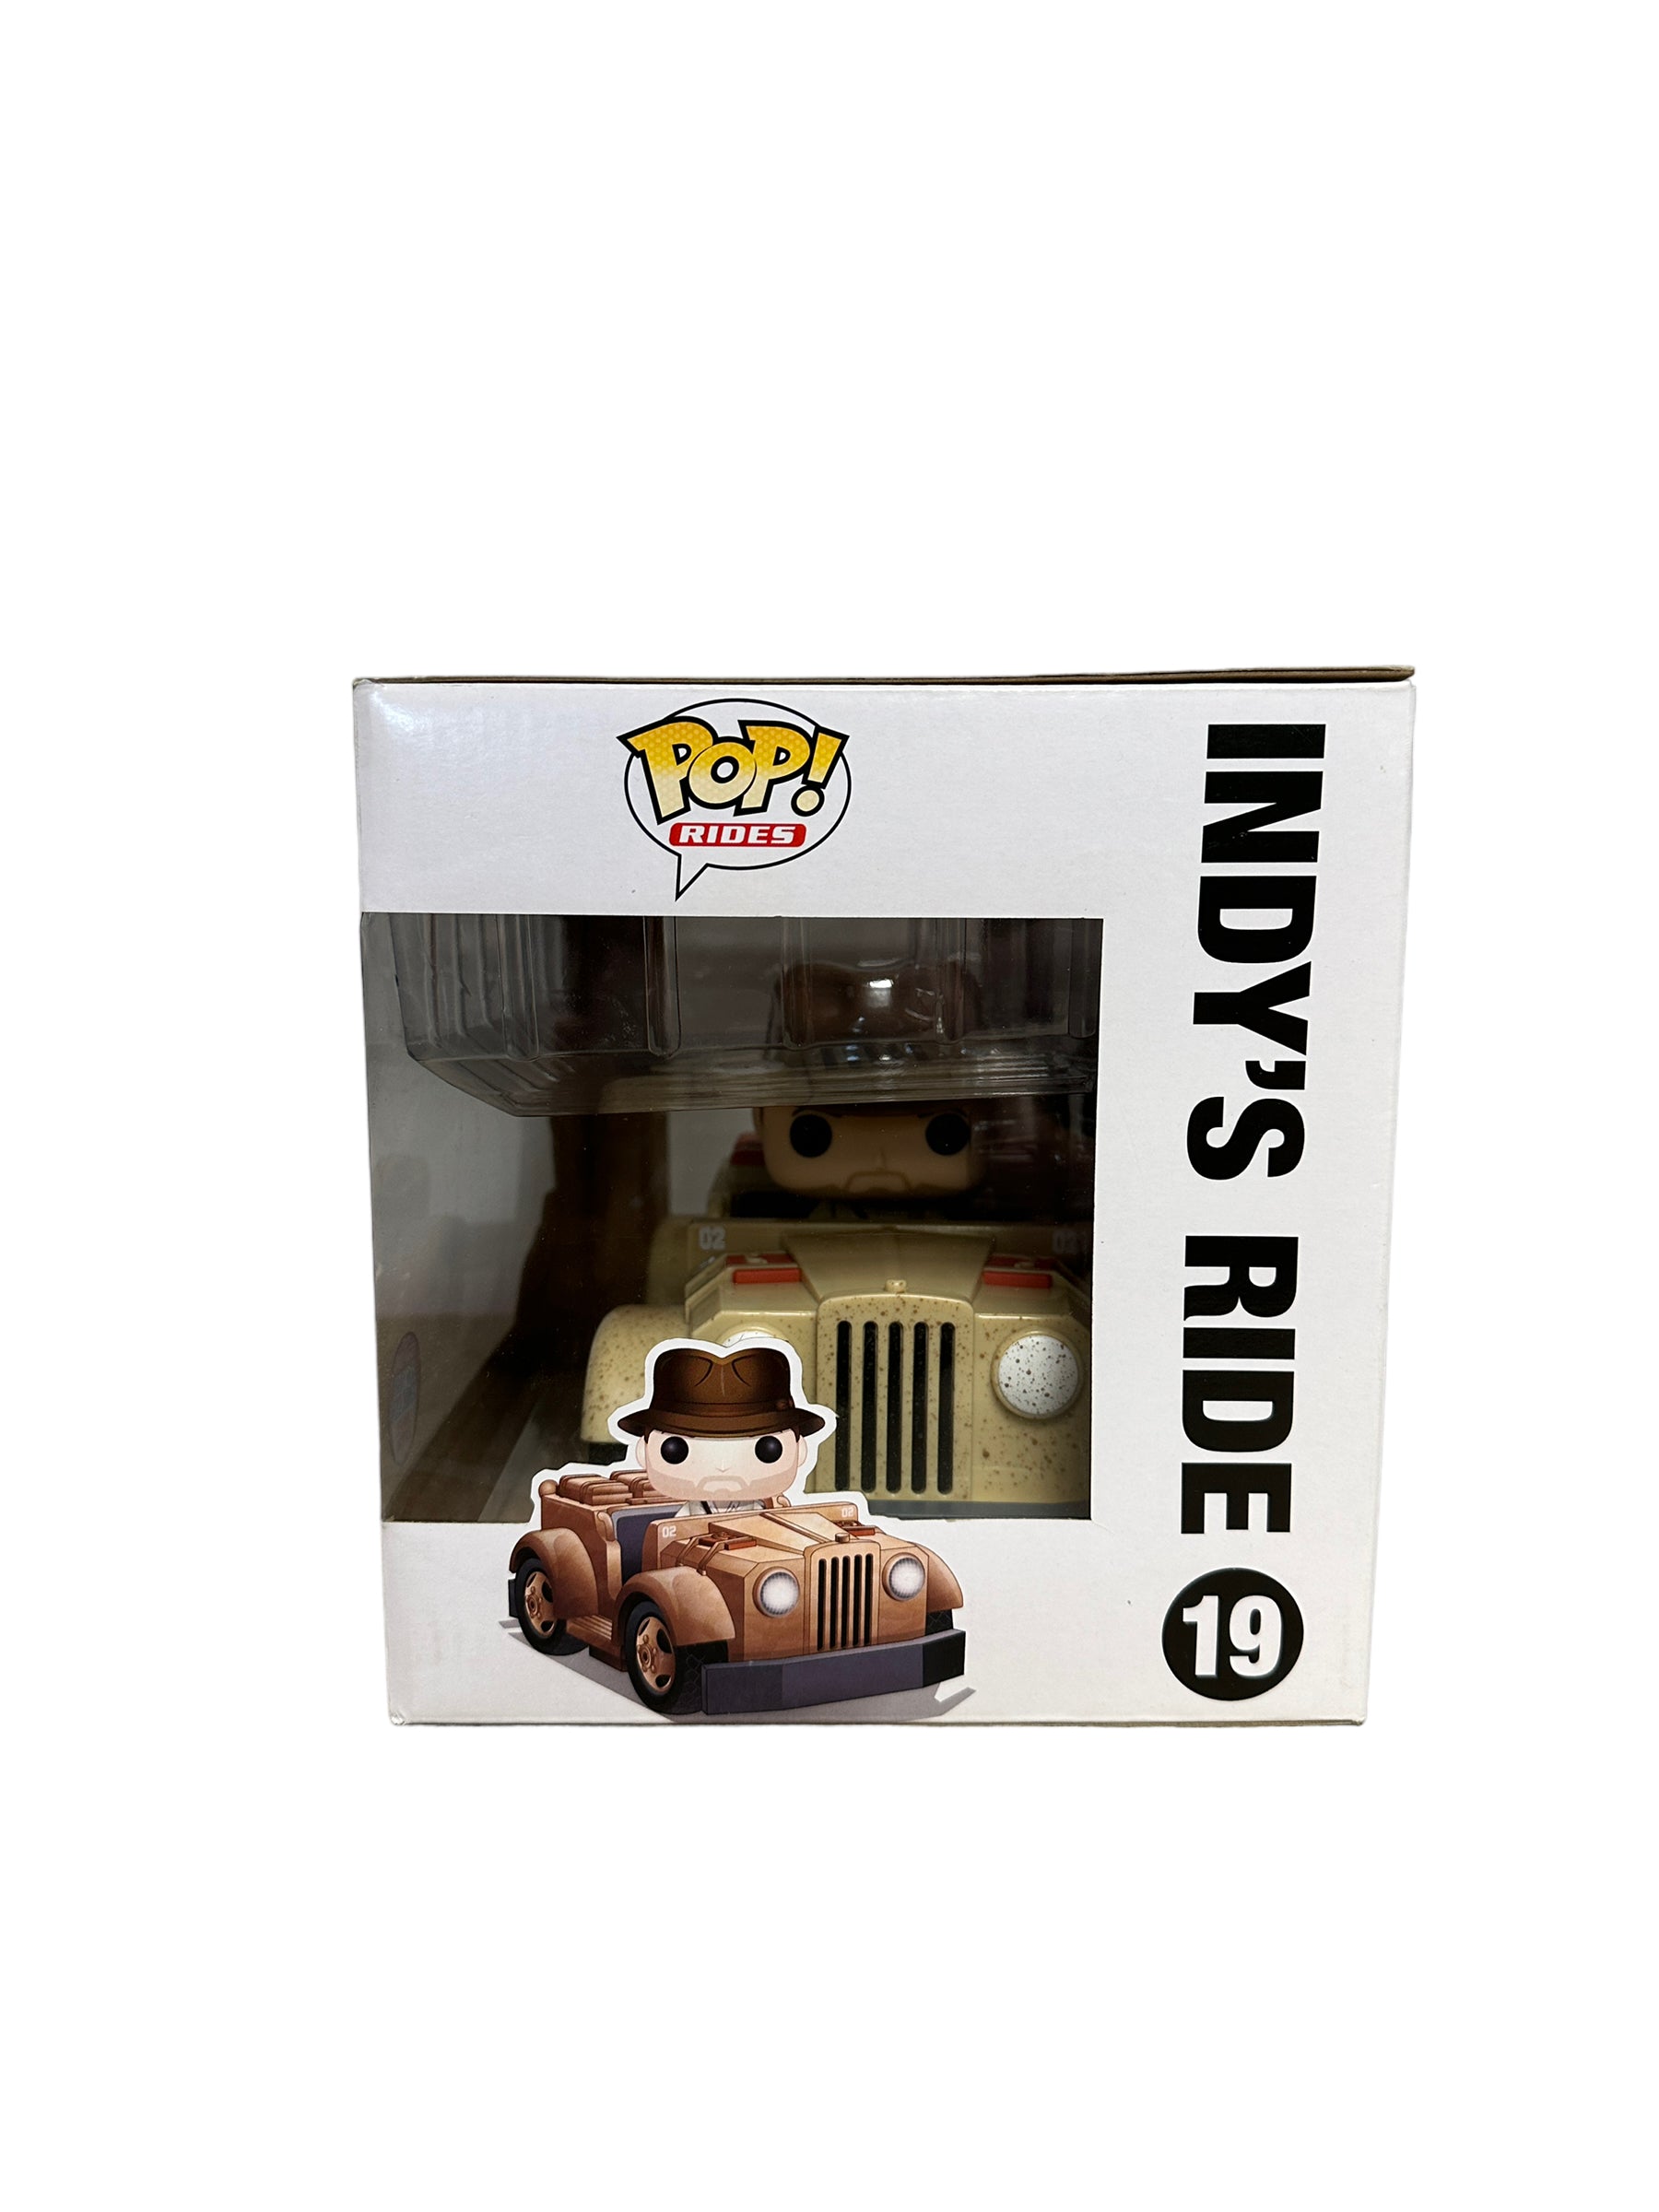 Indy's Ride #19 Funko Pop Rides! - Indiana Jones Adventure - NYCC 2016 Exclusive - Condition 7.5/10